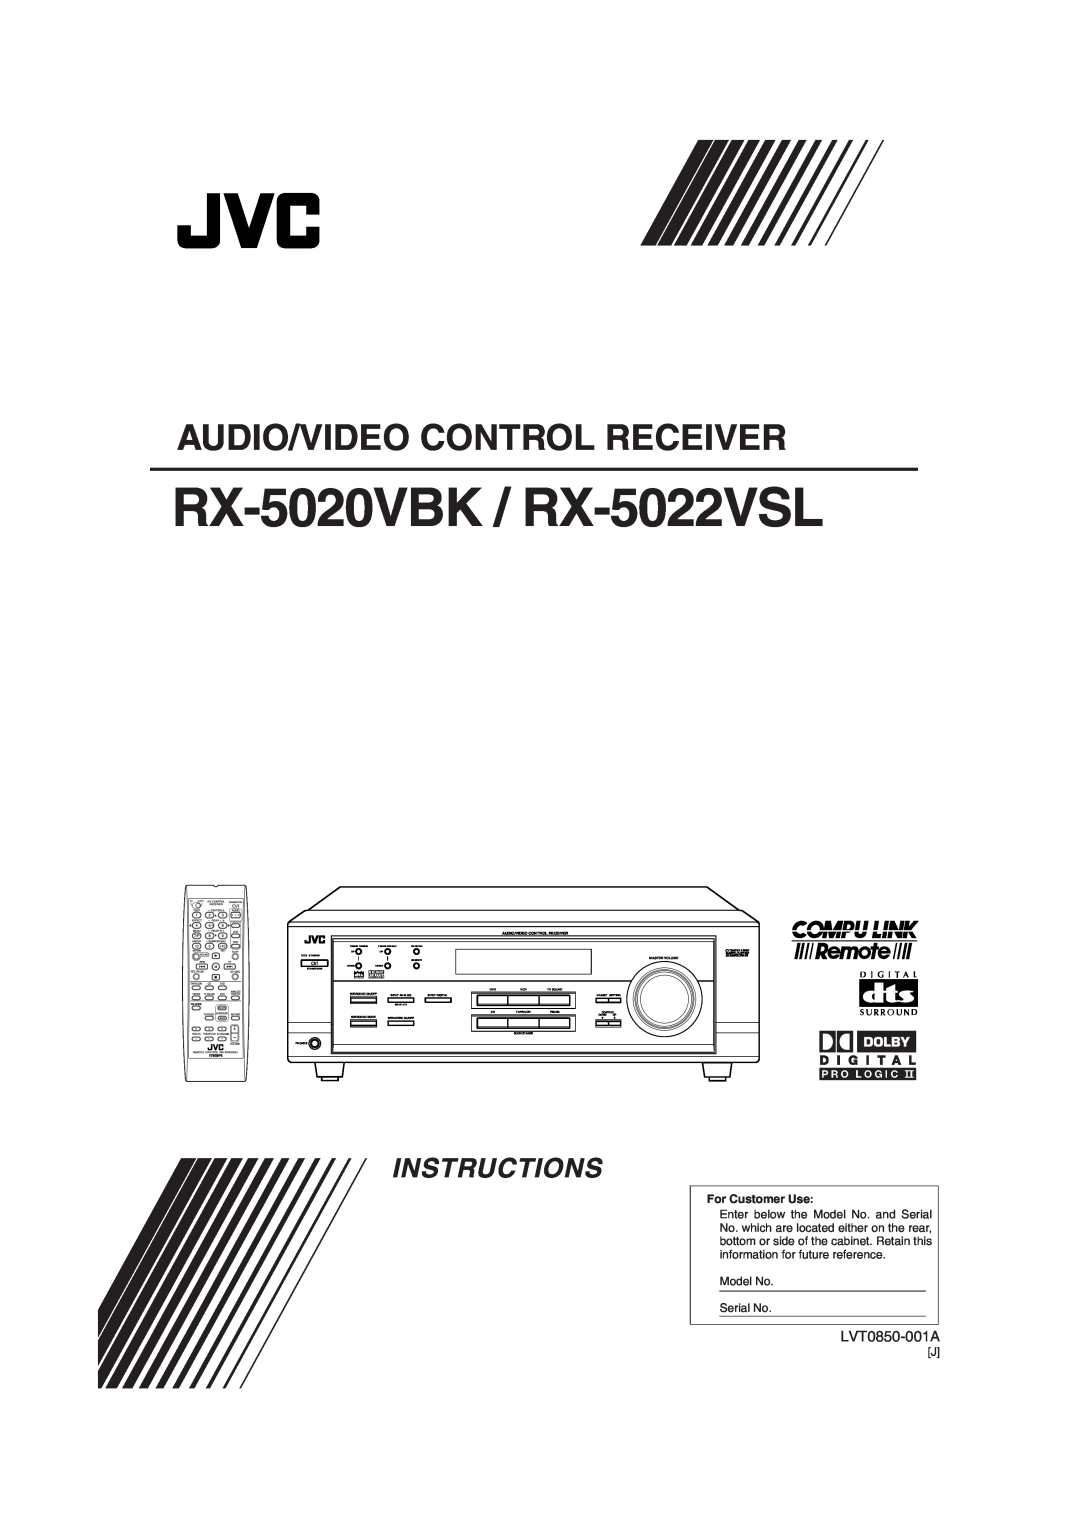 JVC manual RX-5020VBK / RX-5022VSL, Audio/Video Control Receiver, Instructions, LVT0850-001A, For Customer Use 